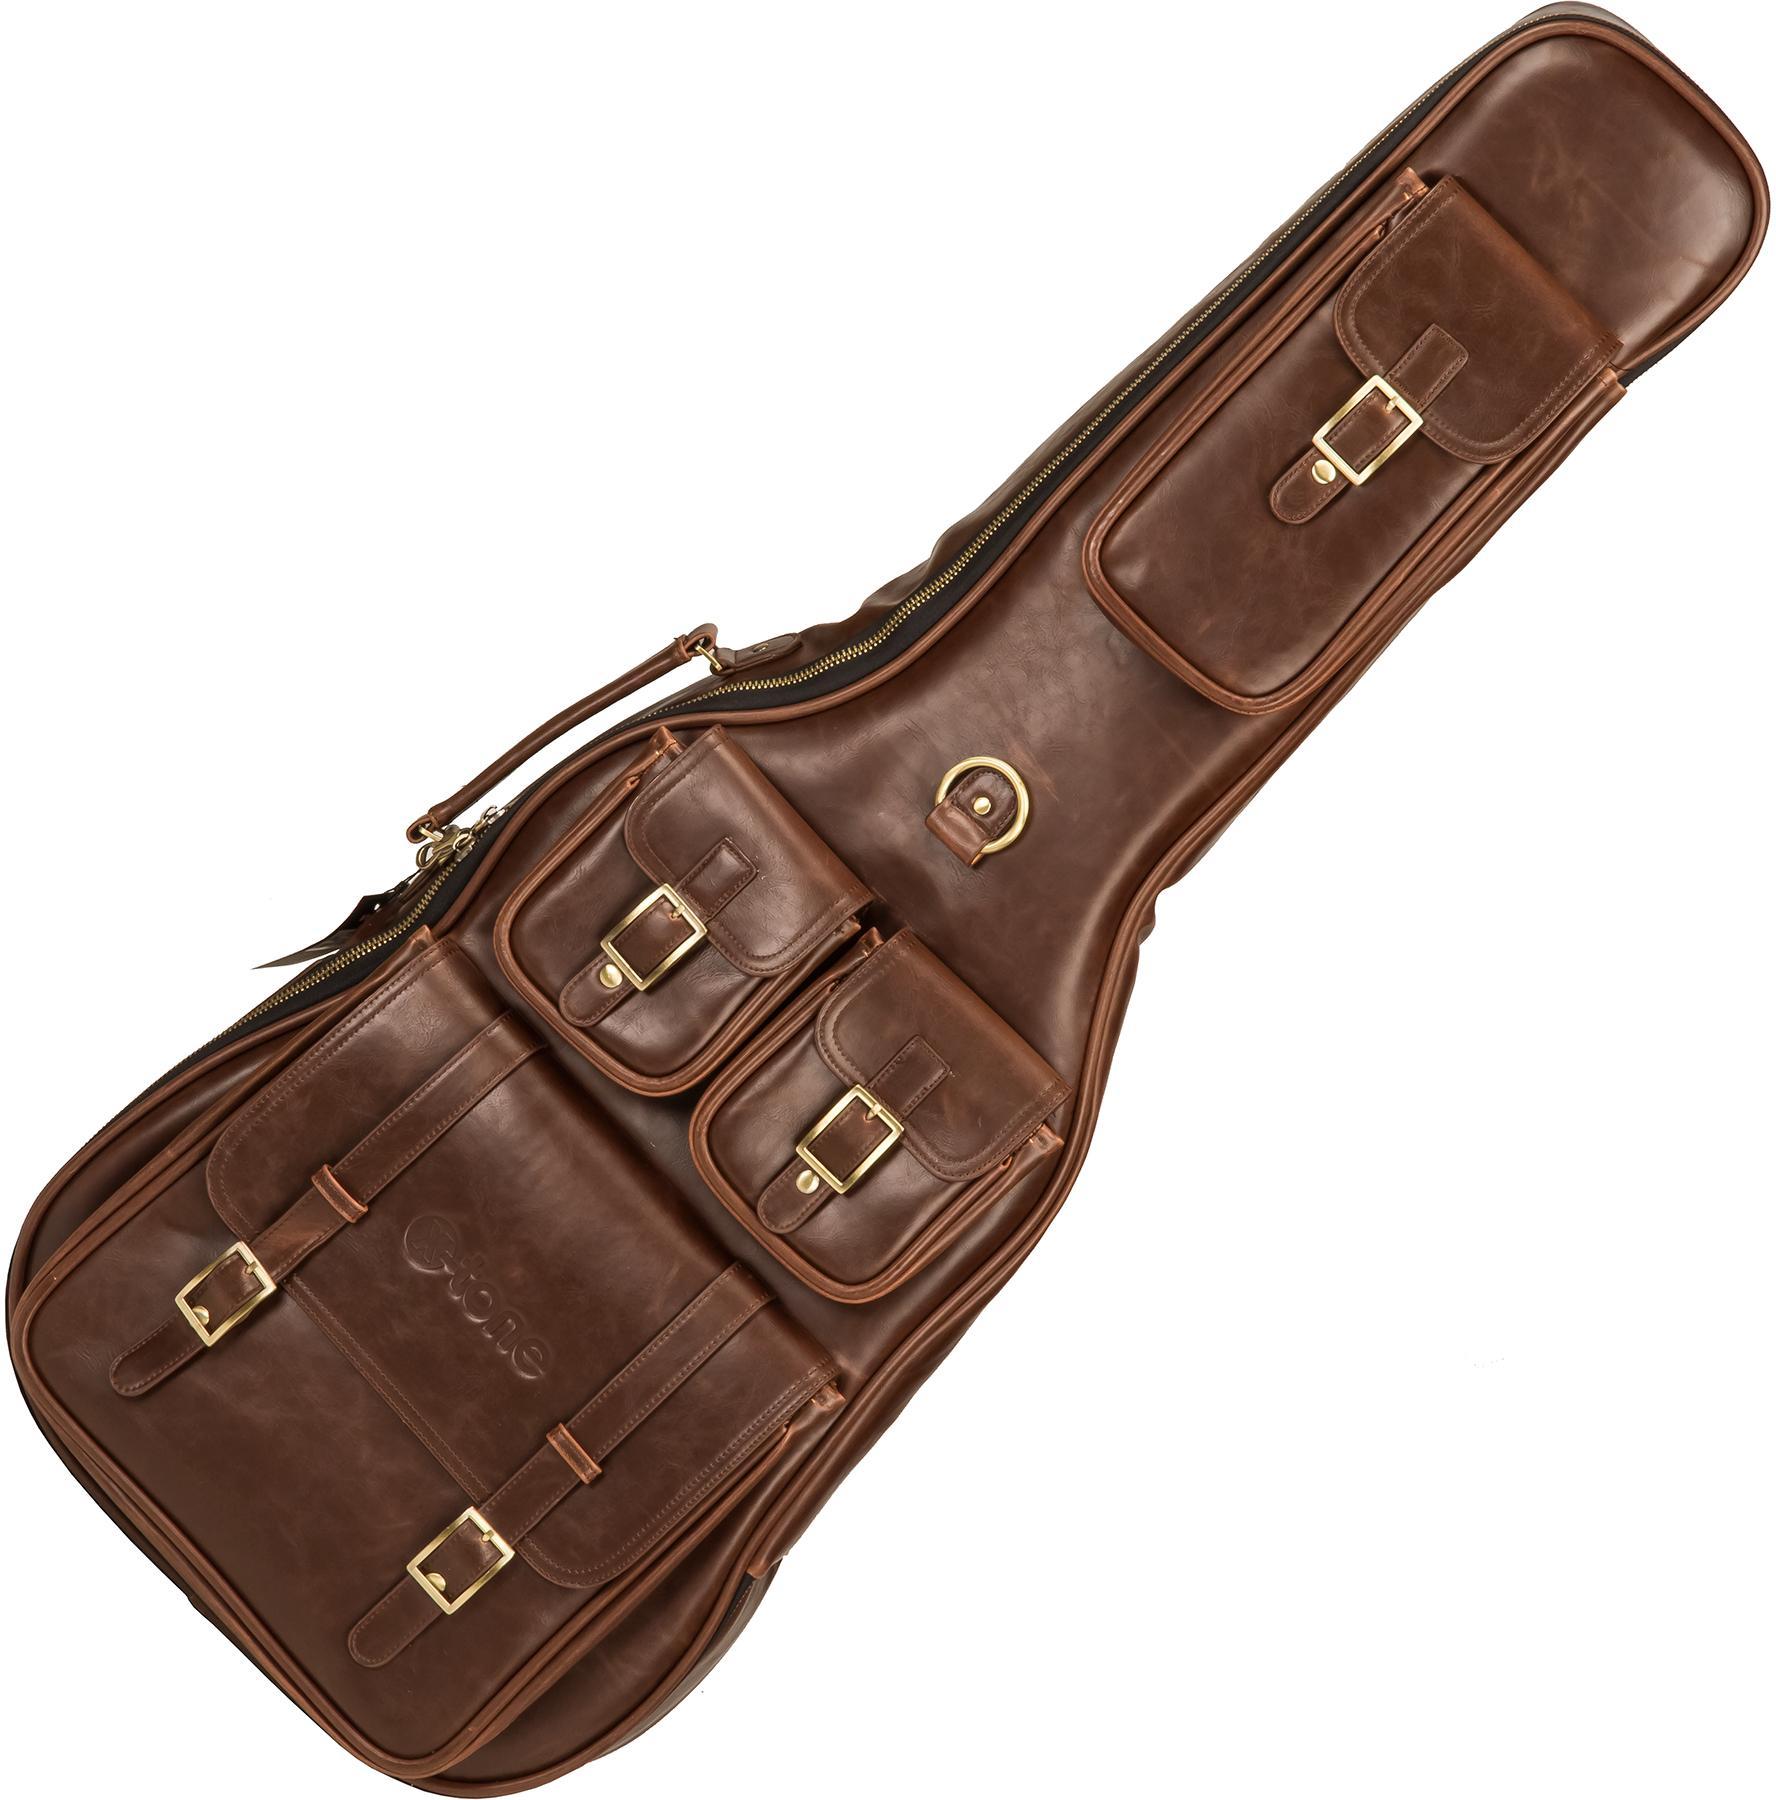 Tasche für e-gitarren  X-tone 2035 Deluxe Leather Electric Guitar Bag - Brown